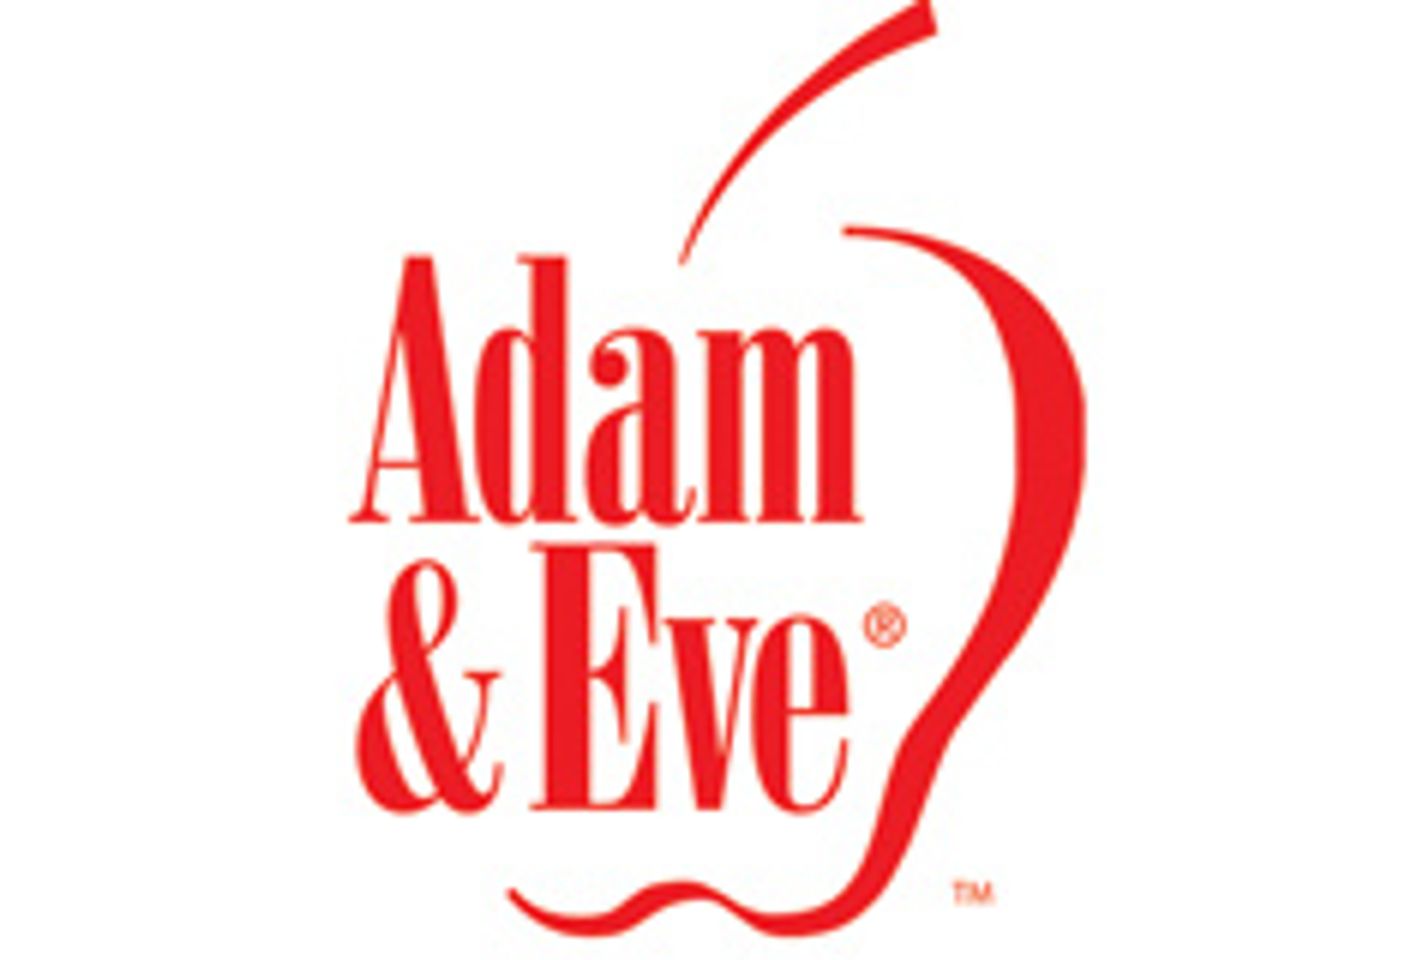 Adam & Eve Announces Sales Spike in Q3